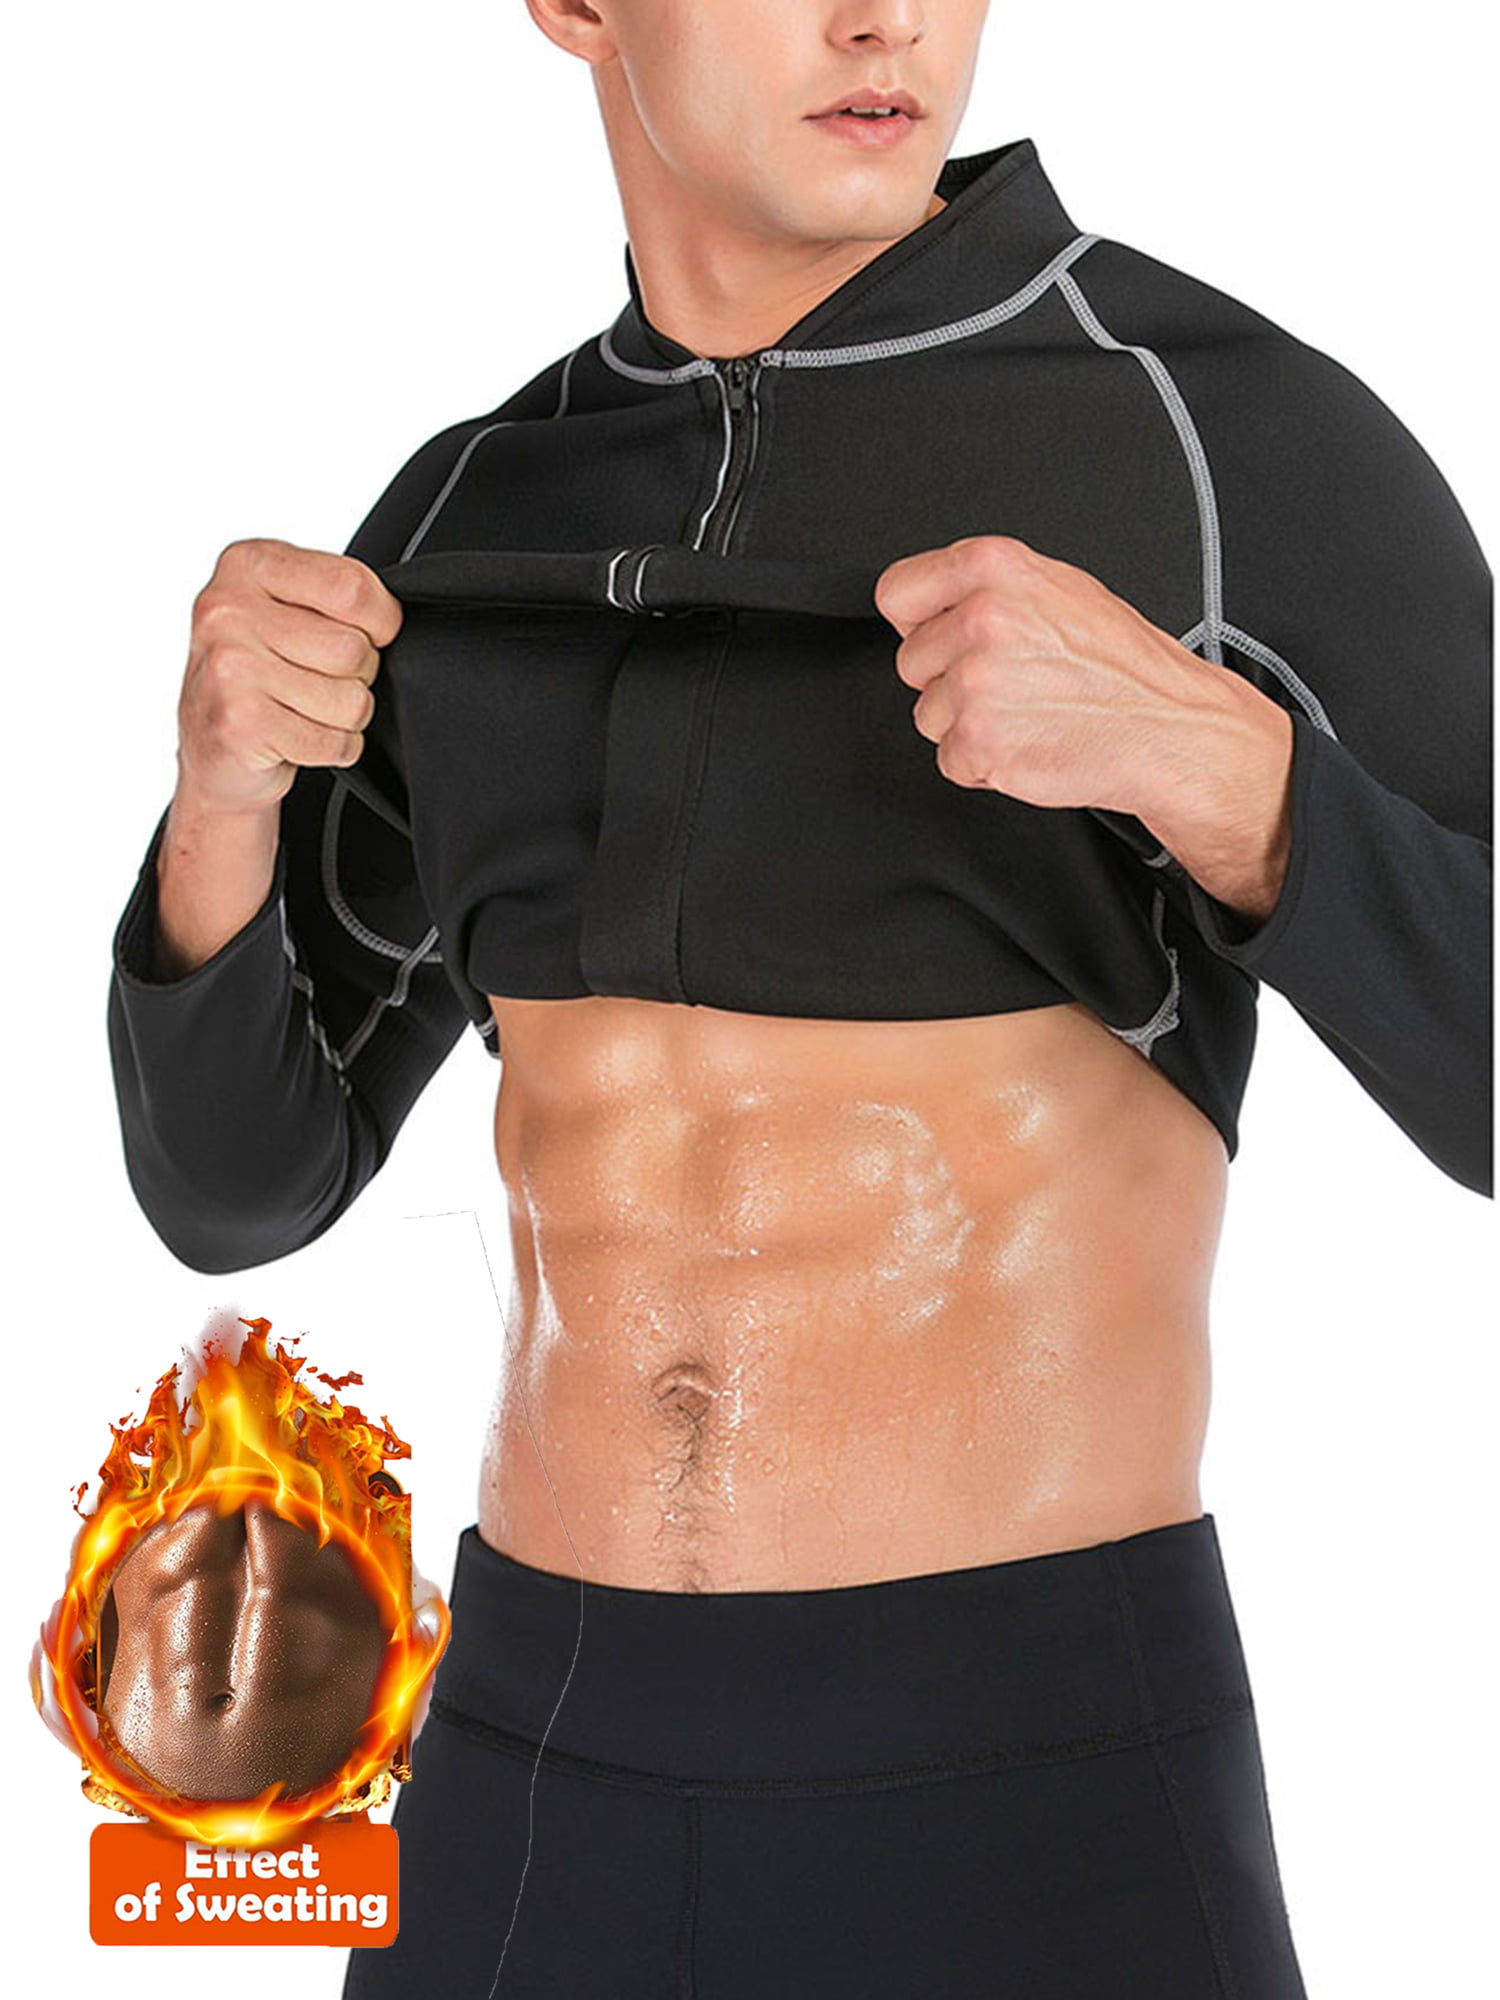 Ursexyly Men Weight Loss Sauna Sweat Workout Short Hot Neoprene Athletic Gym Pant Legging Fat Burner Slimming